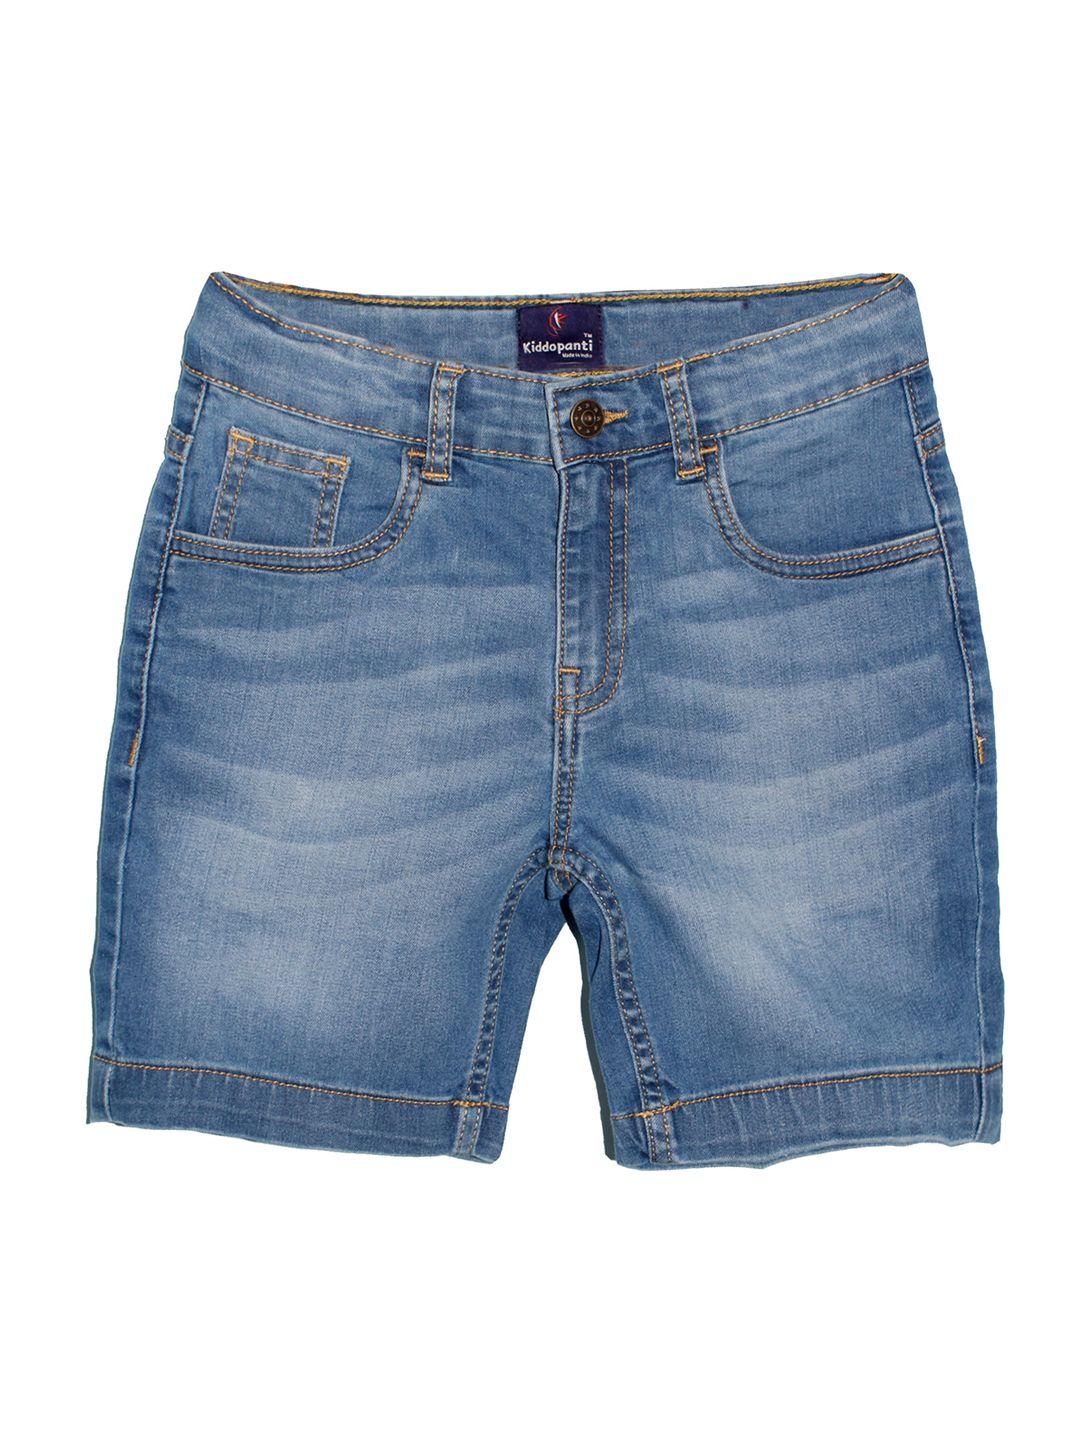 KiddoPanti Boys Washed Denim Shorts